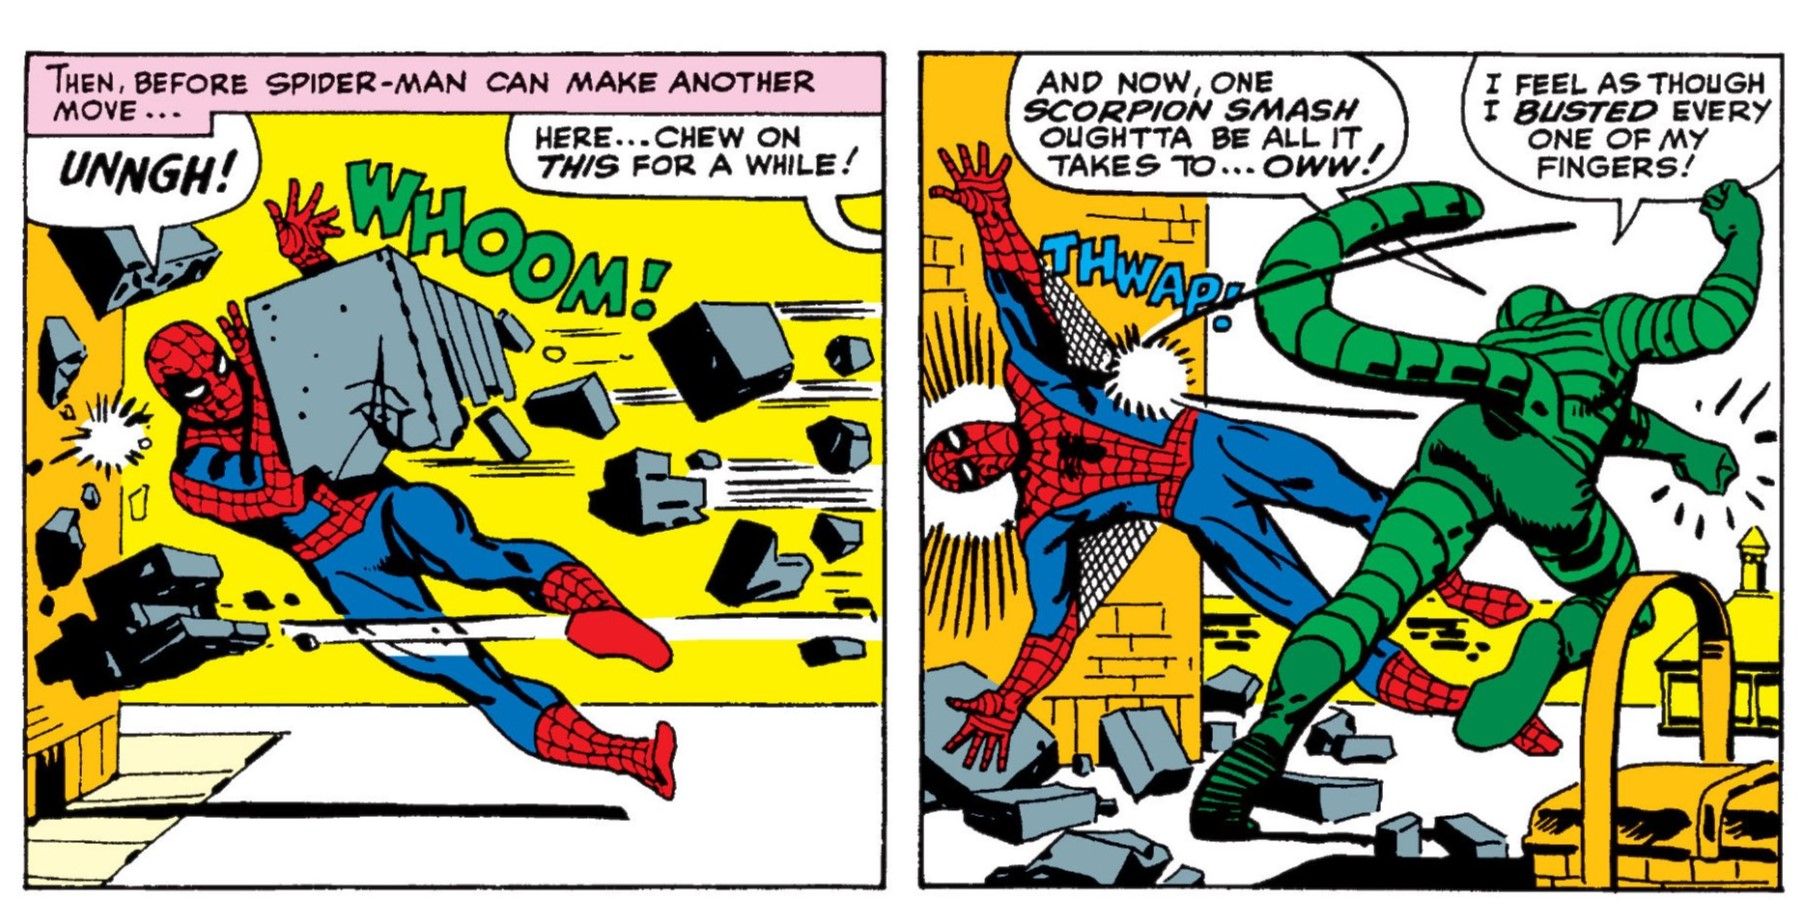 Spider-Man #20 Scorpion Fight